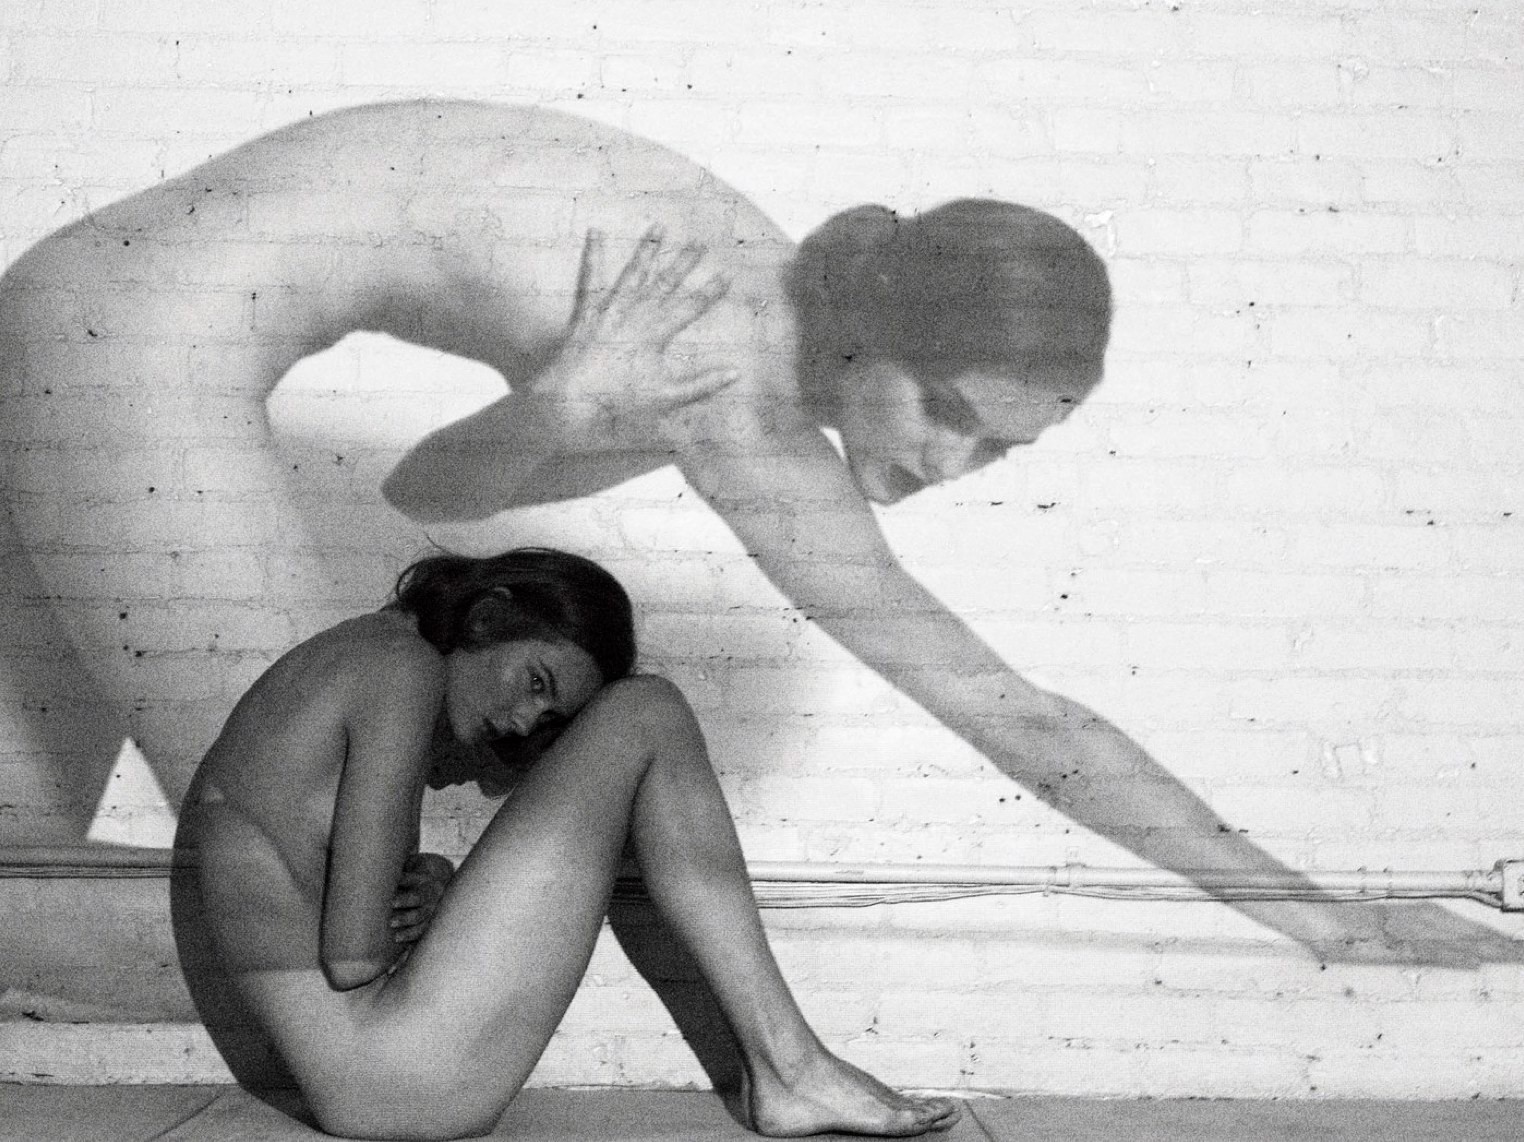 Monika jagaciak entièrement nue dans un photoshoot johan lindeberg 2015
 #75160706